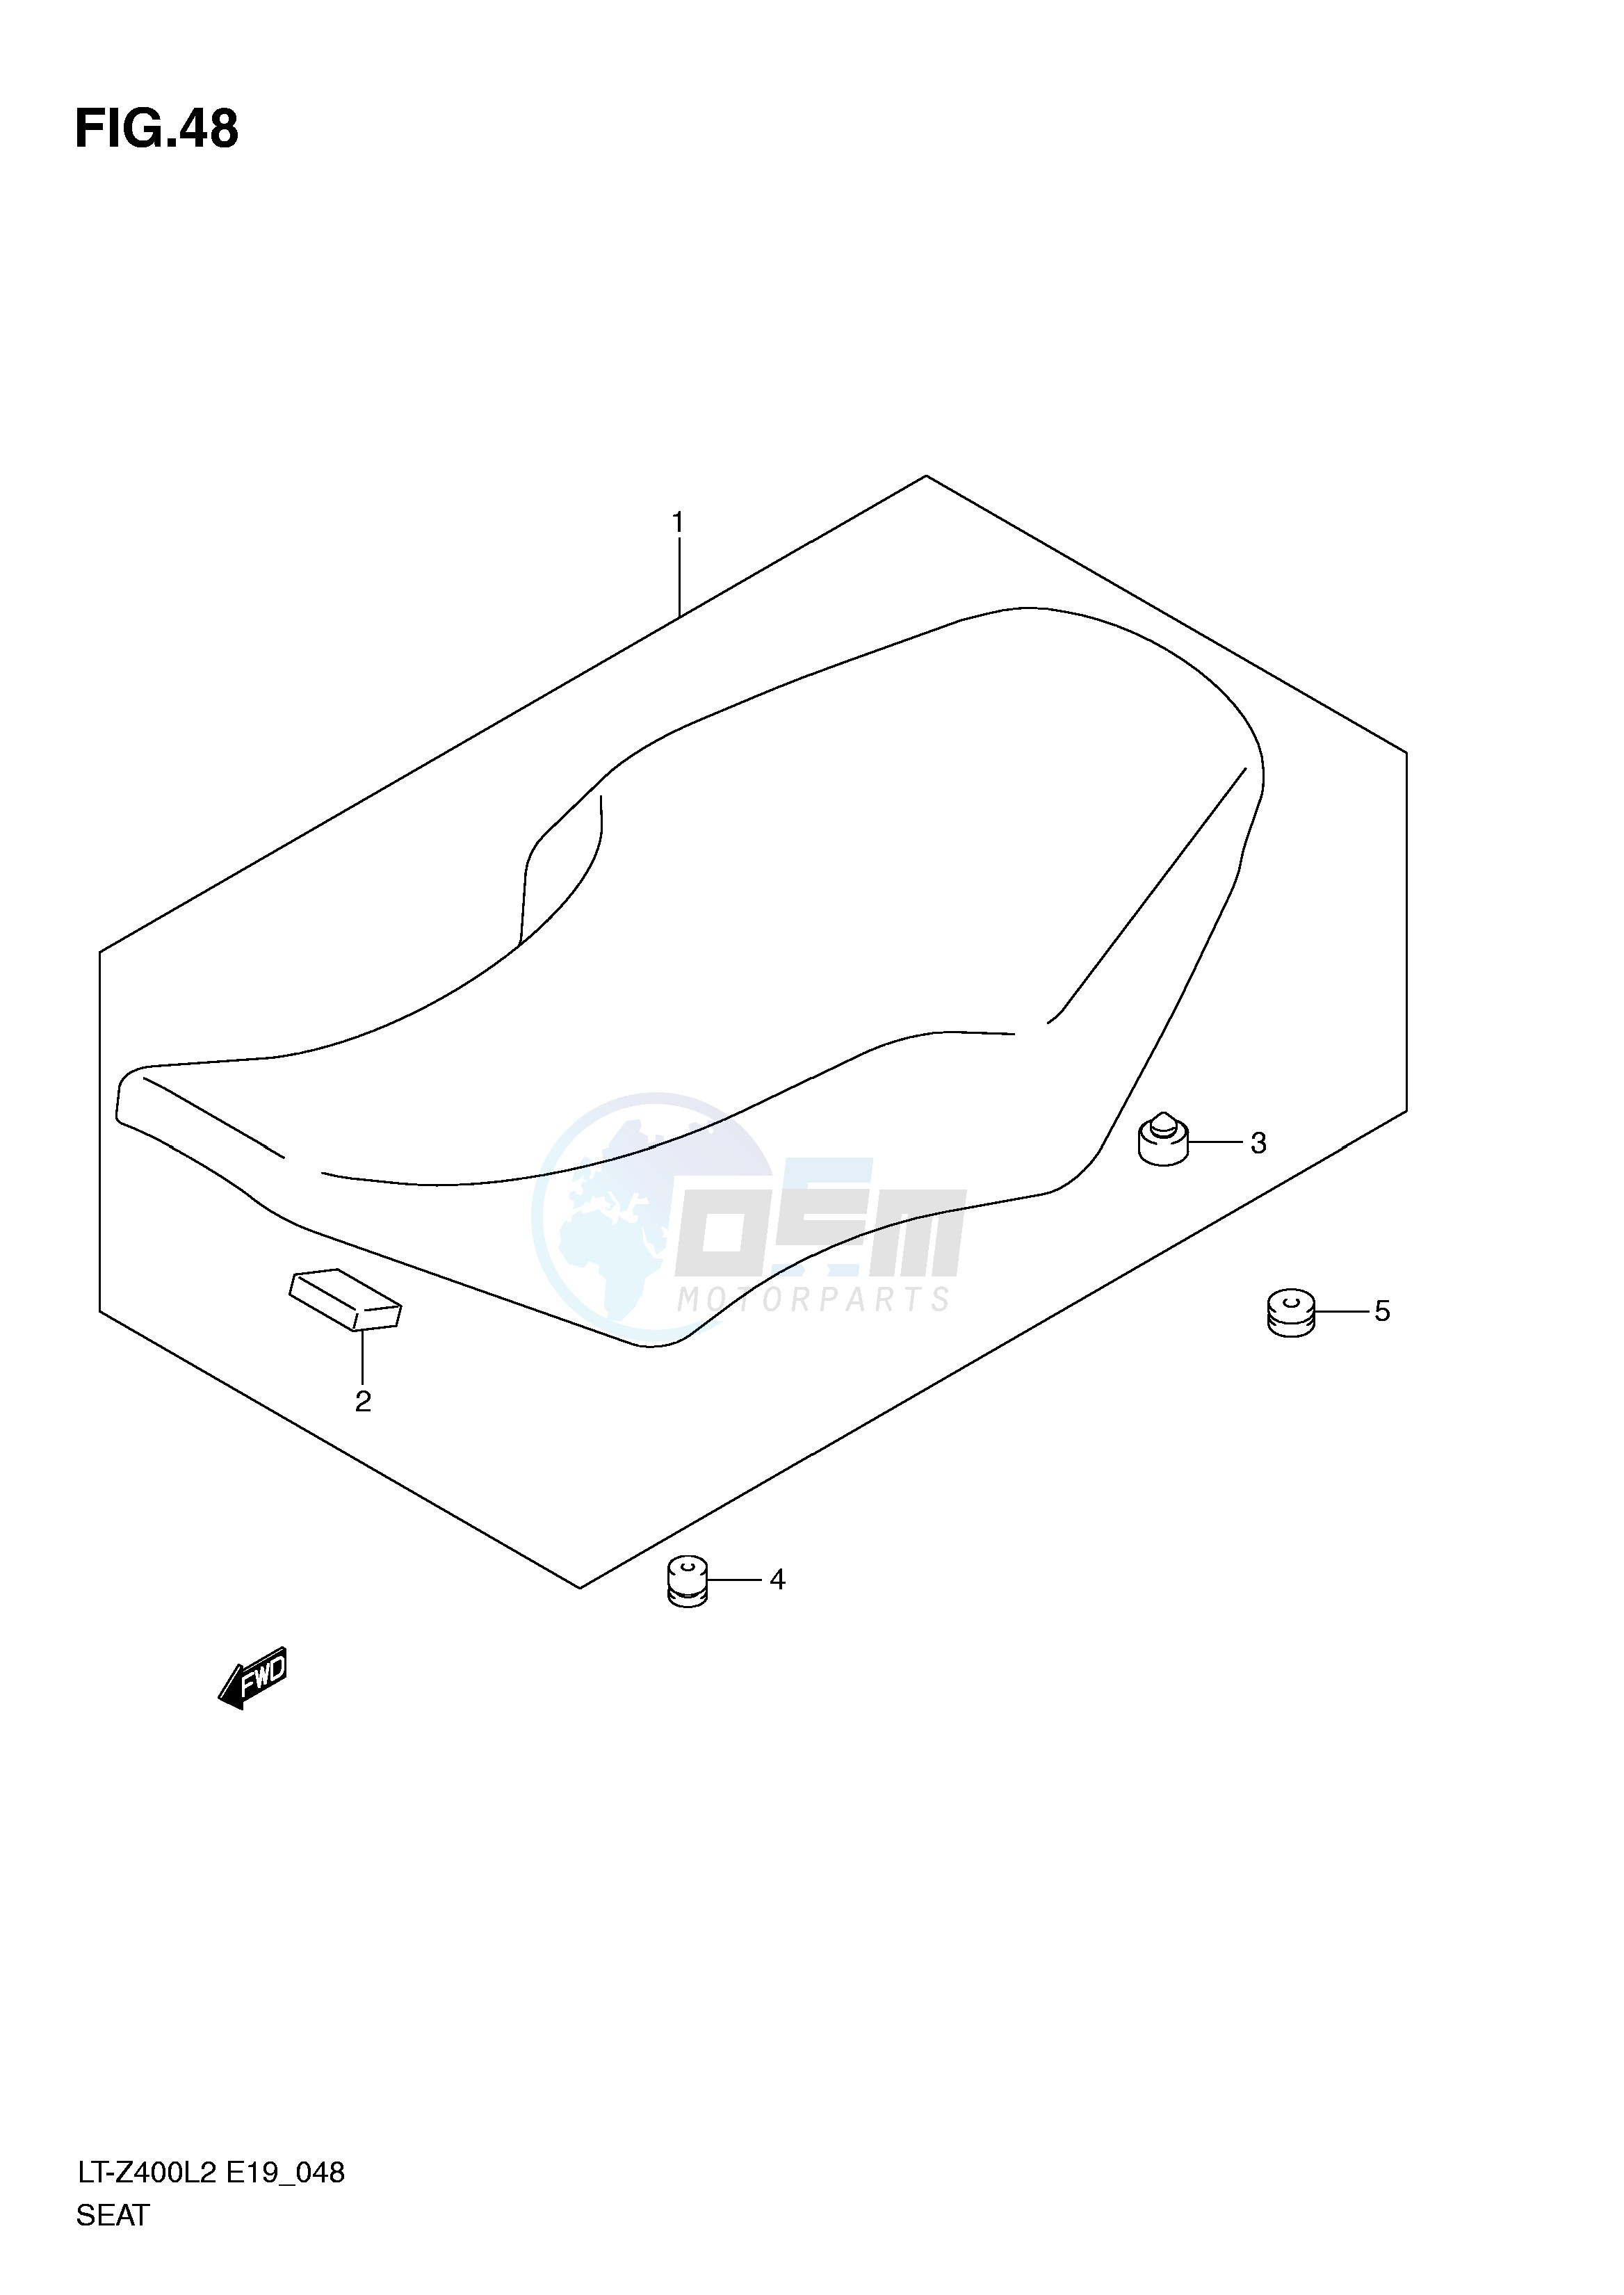 SEAT (LT-Z400ZL2 E19) blueprint